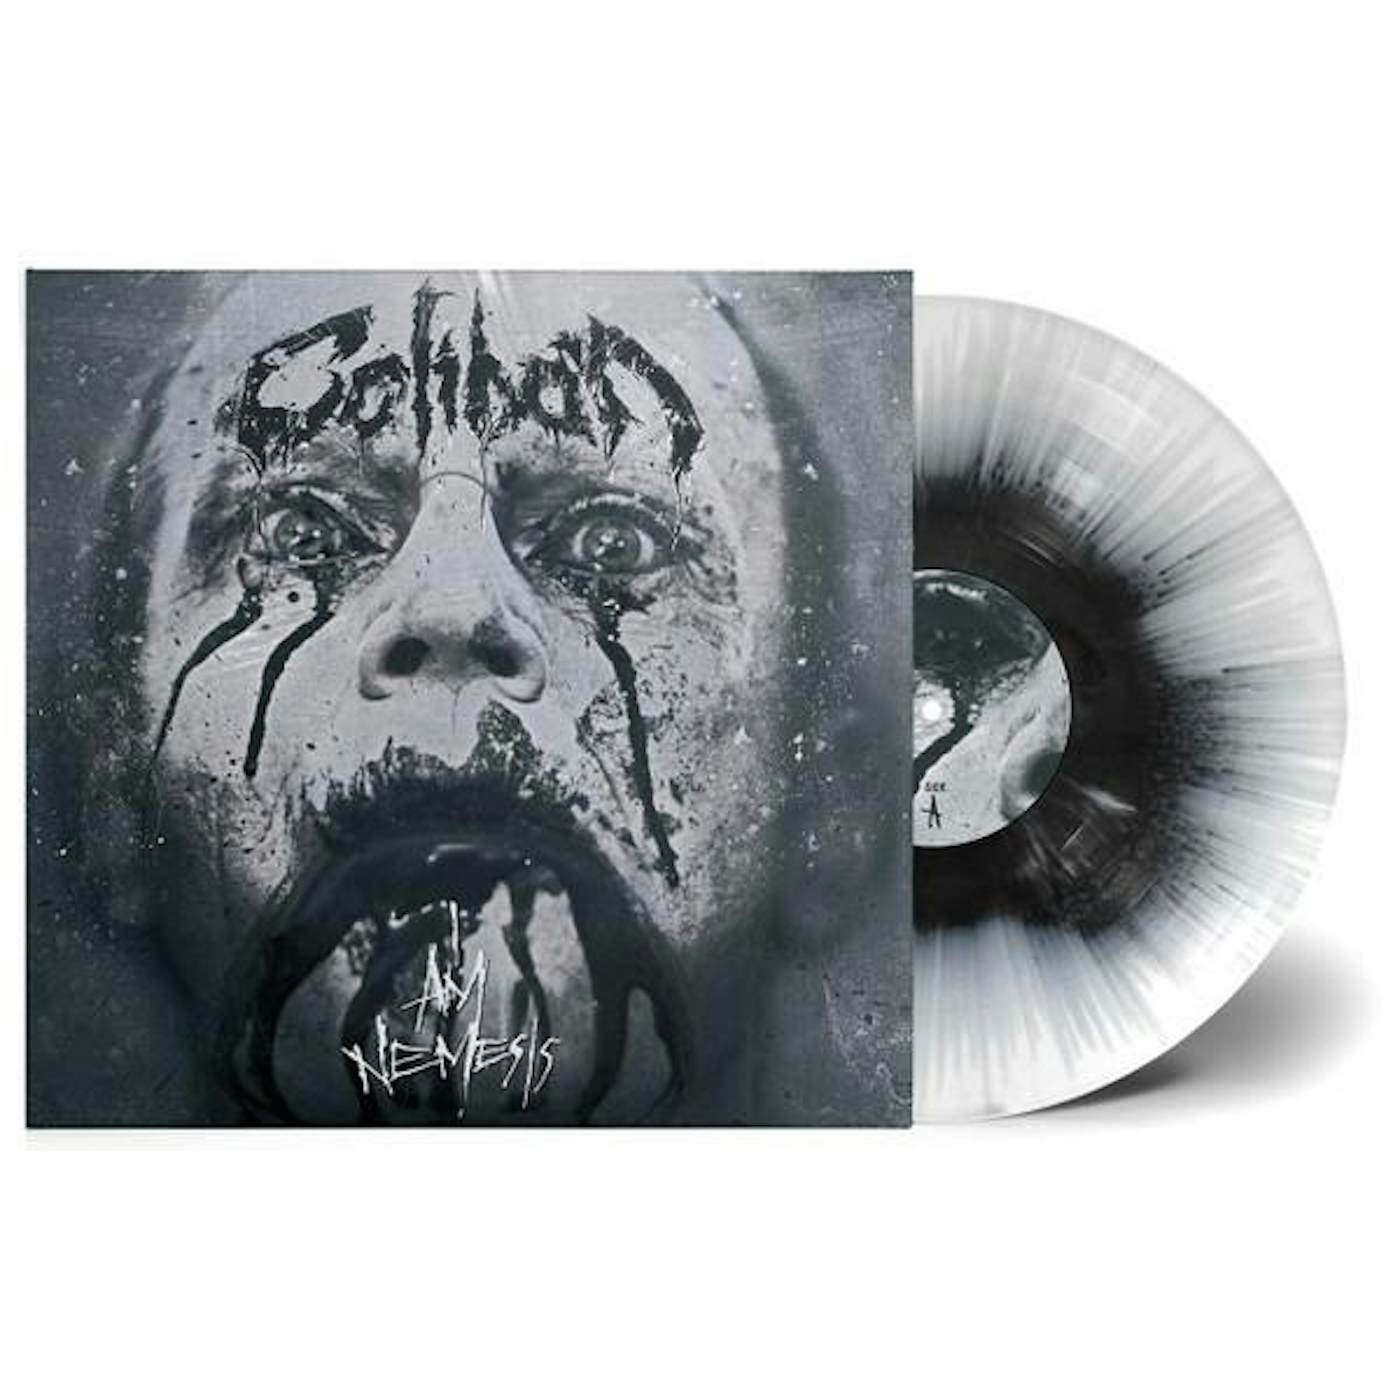 Caliban I AM NEMESIS Vinyl Record